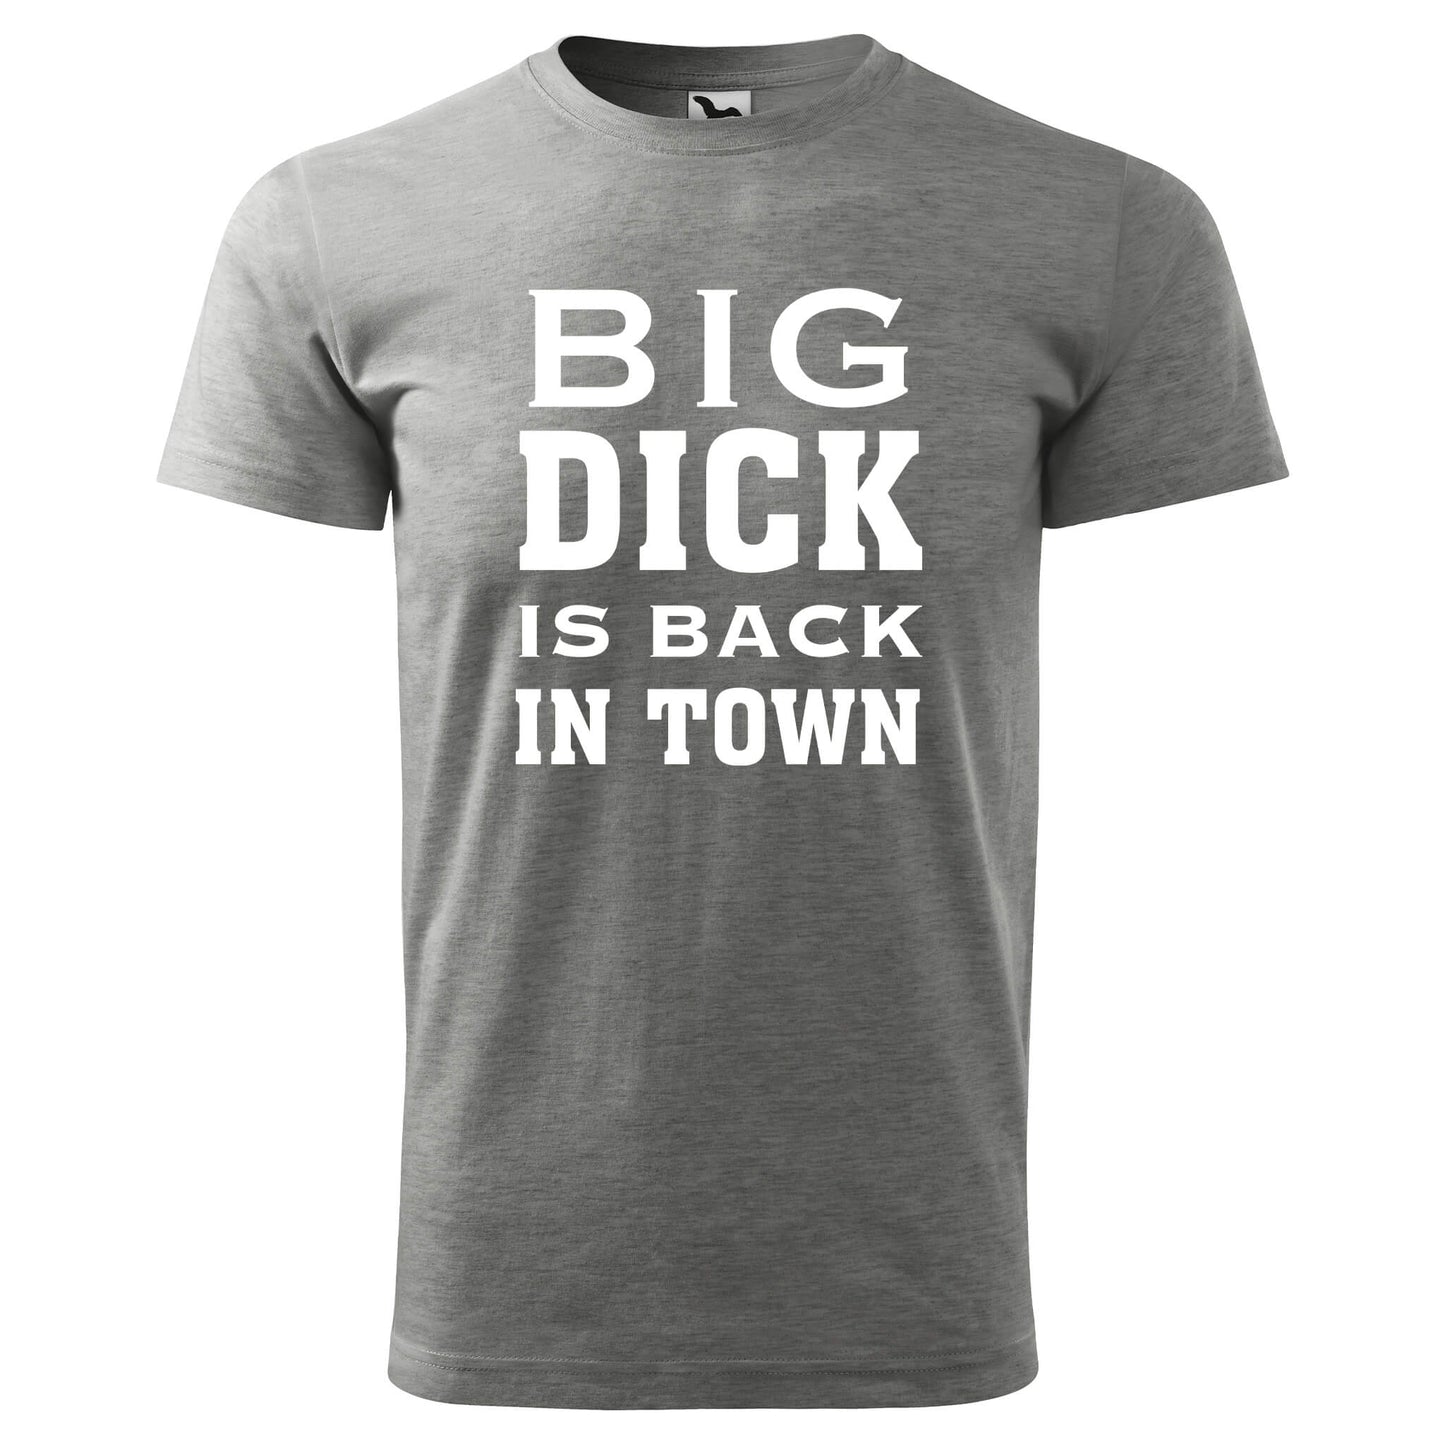 Tričko - Big dick is back in town